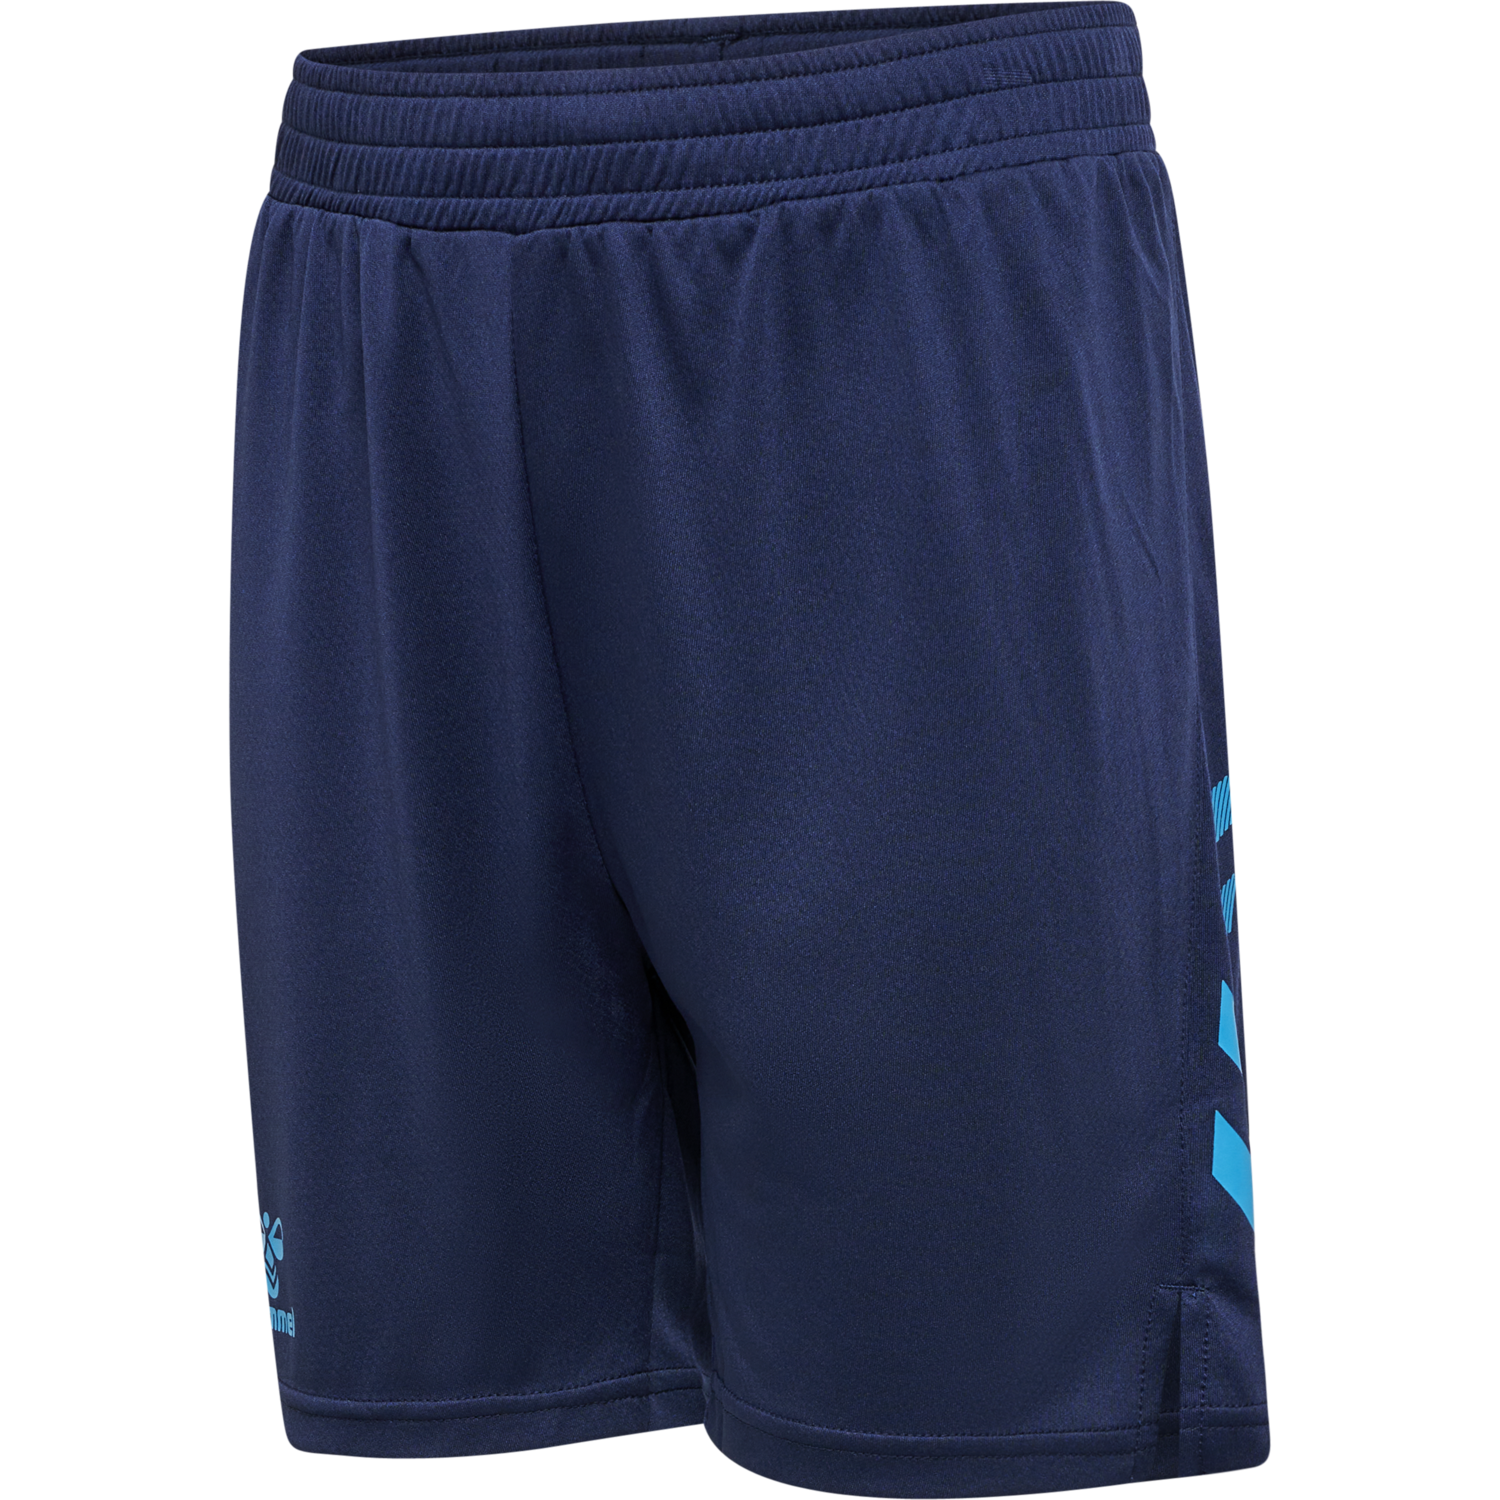 3 x Hummel Sporthose Shorts Handball 10-984 RNL 5001 gelb/blau XXL Neu OVP 